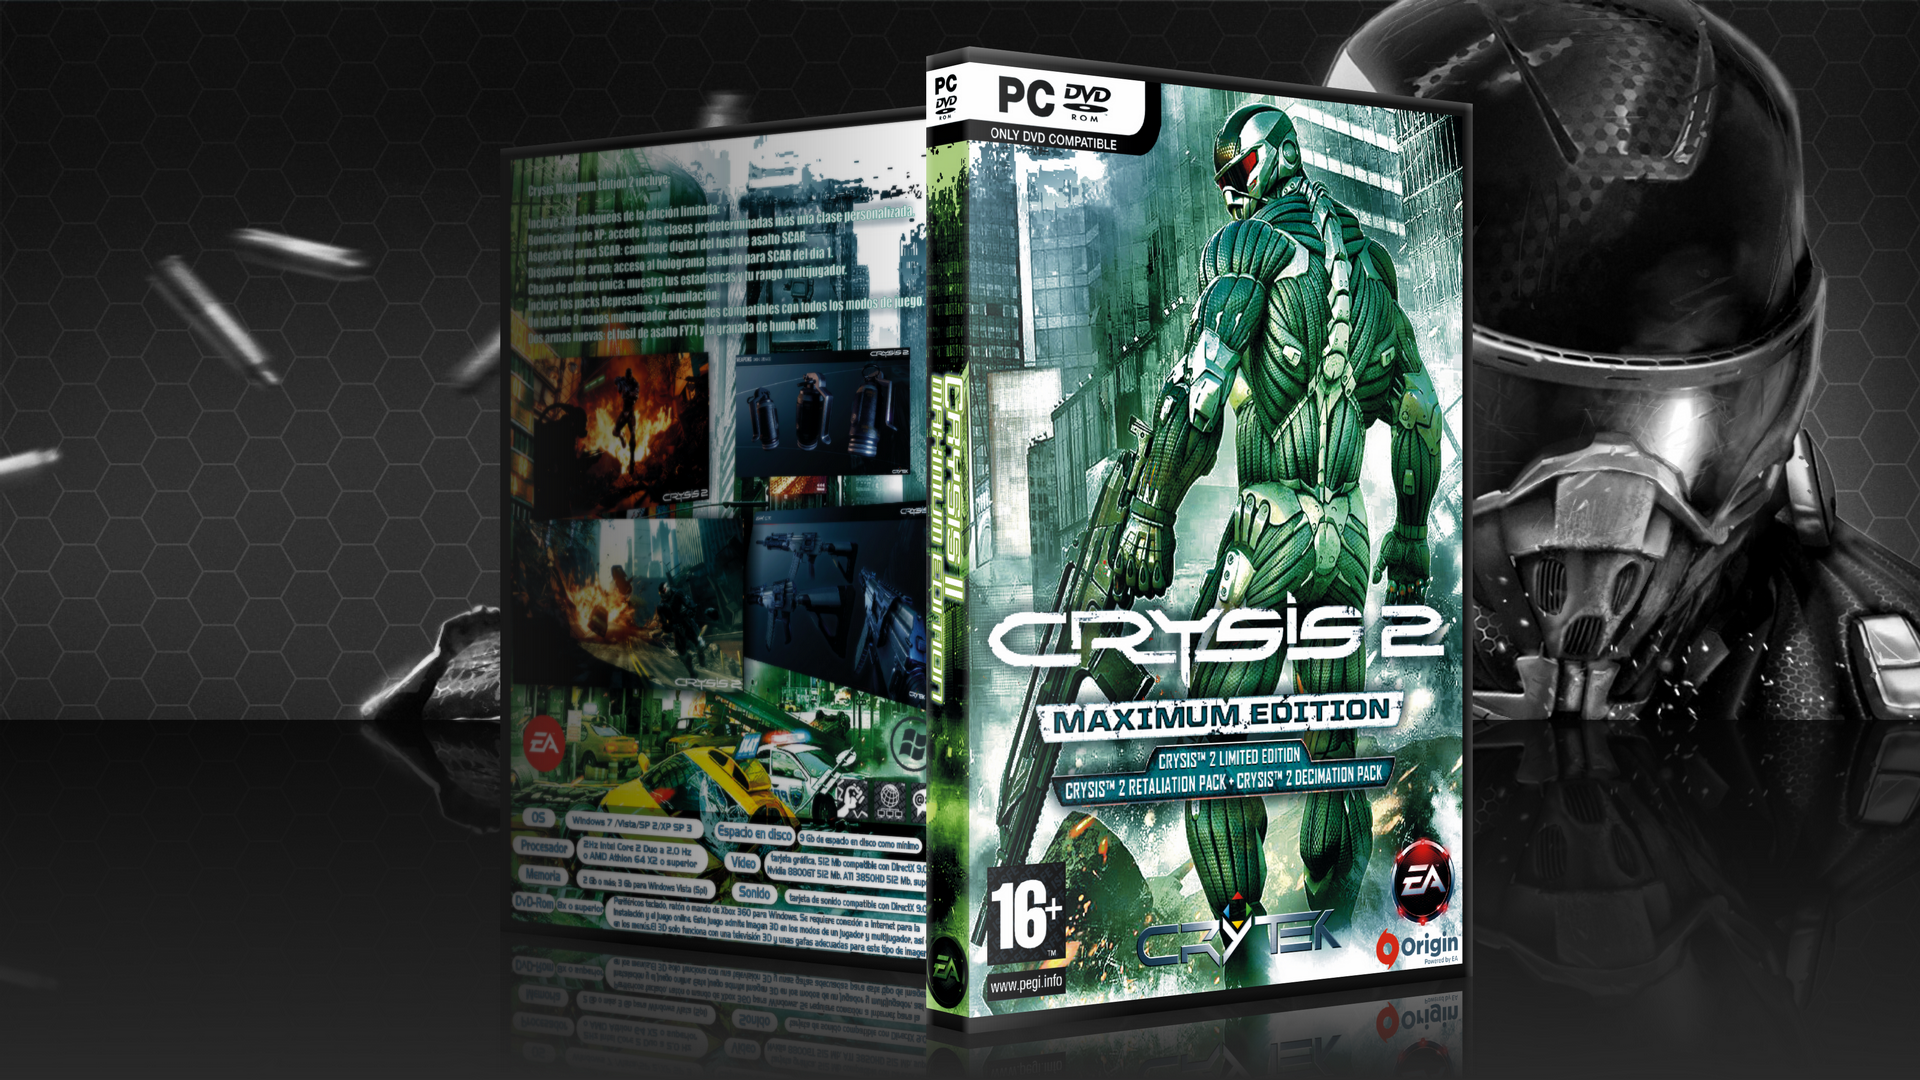 Crysis 2 Maximum Edition Cover Box box cover